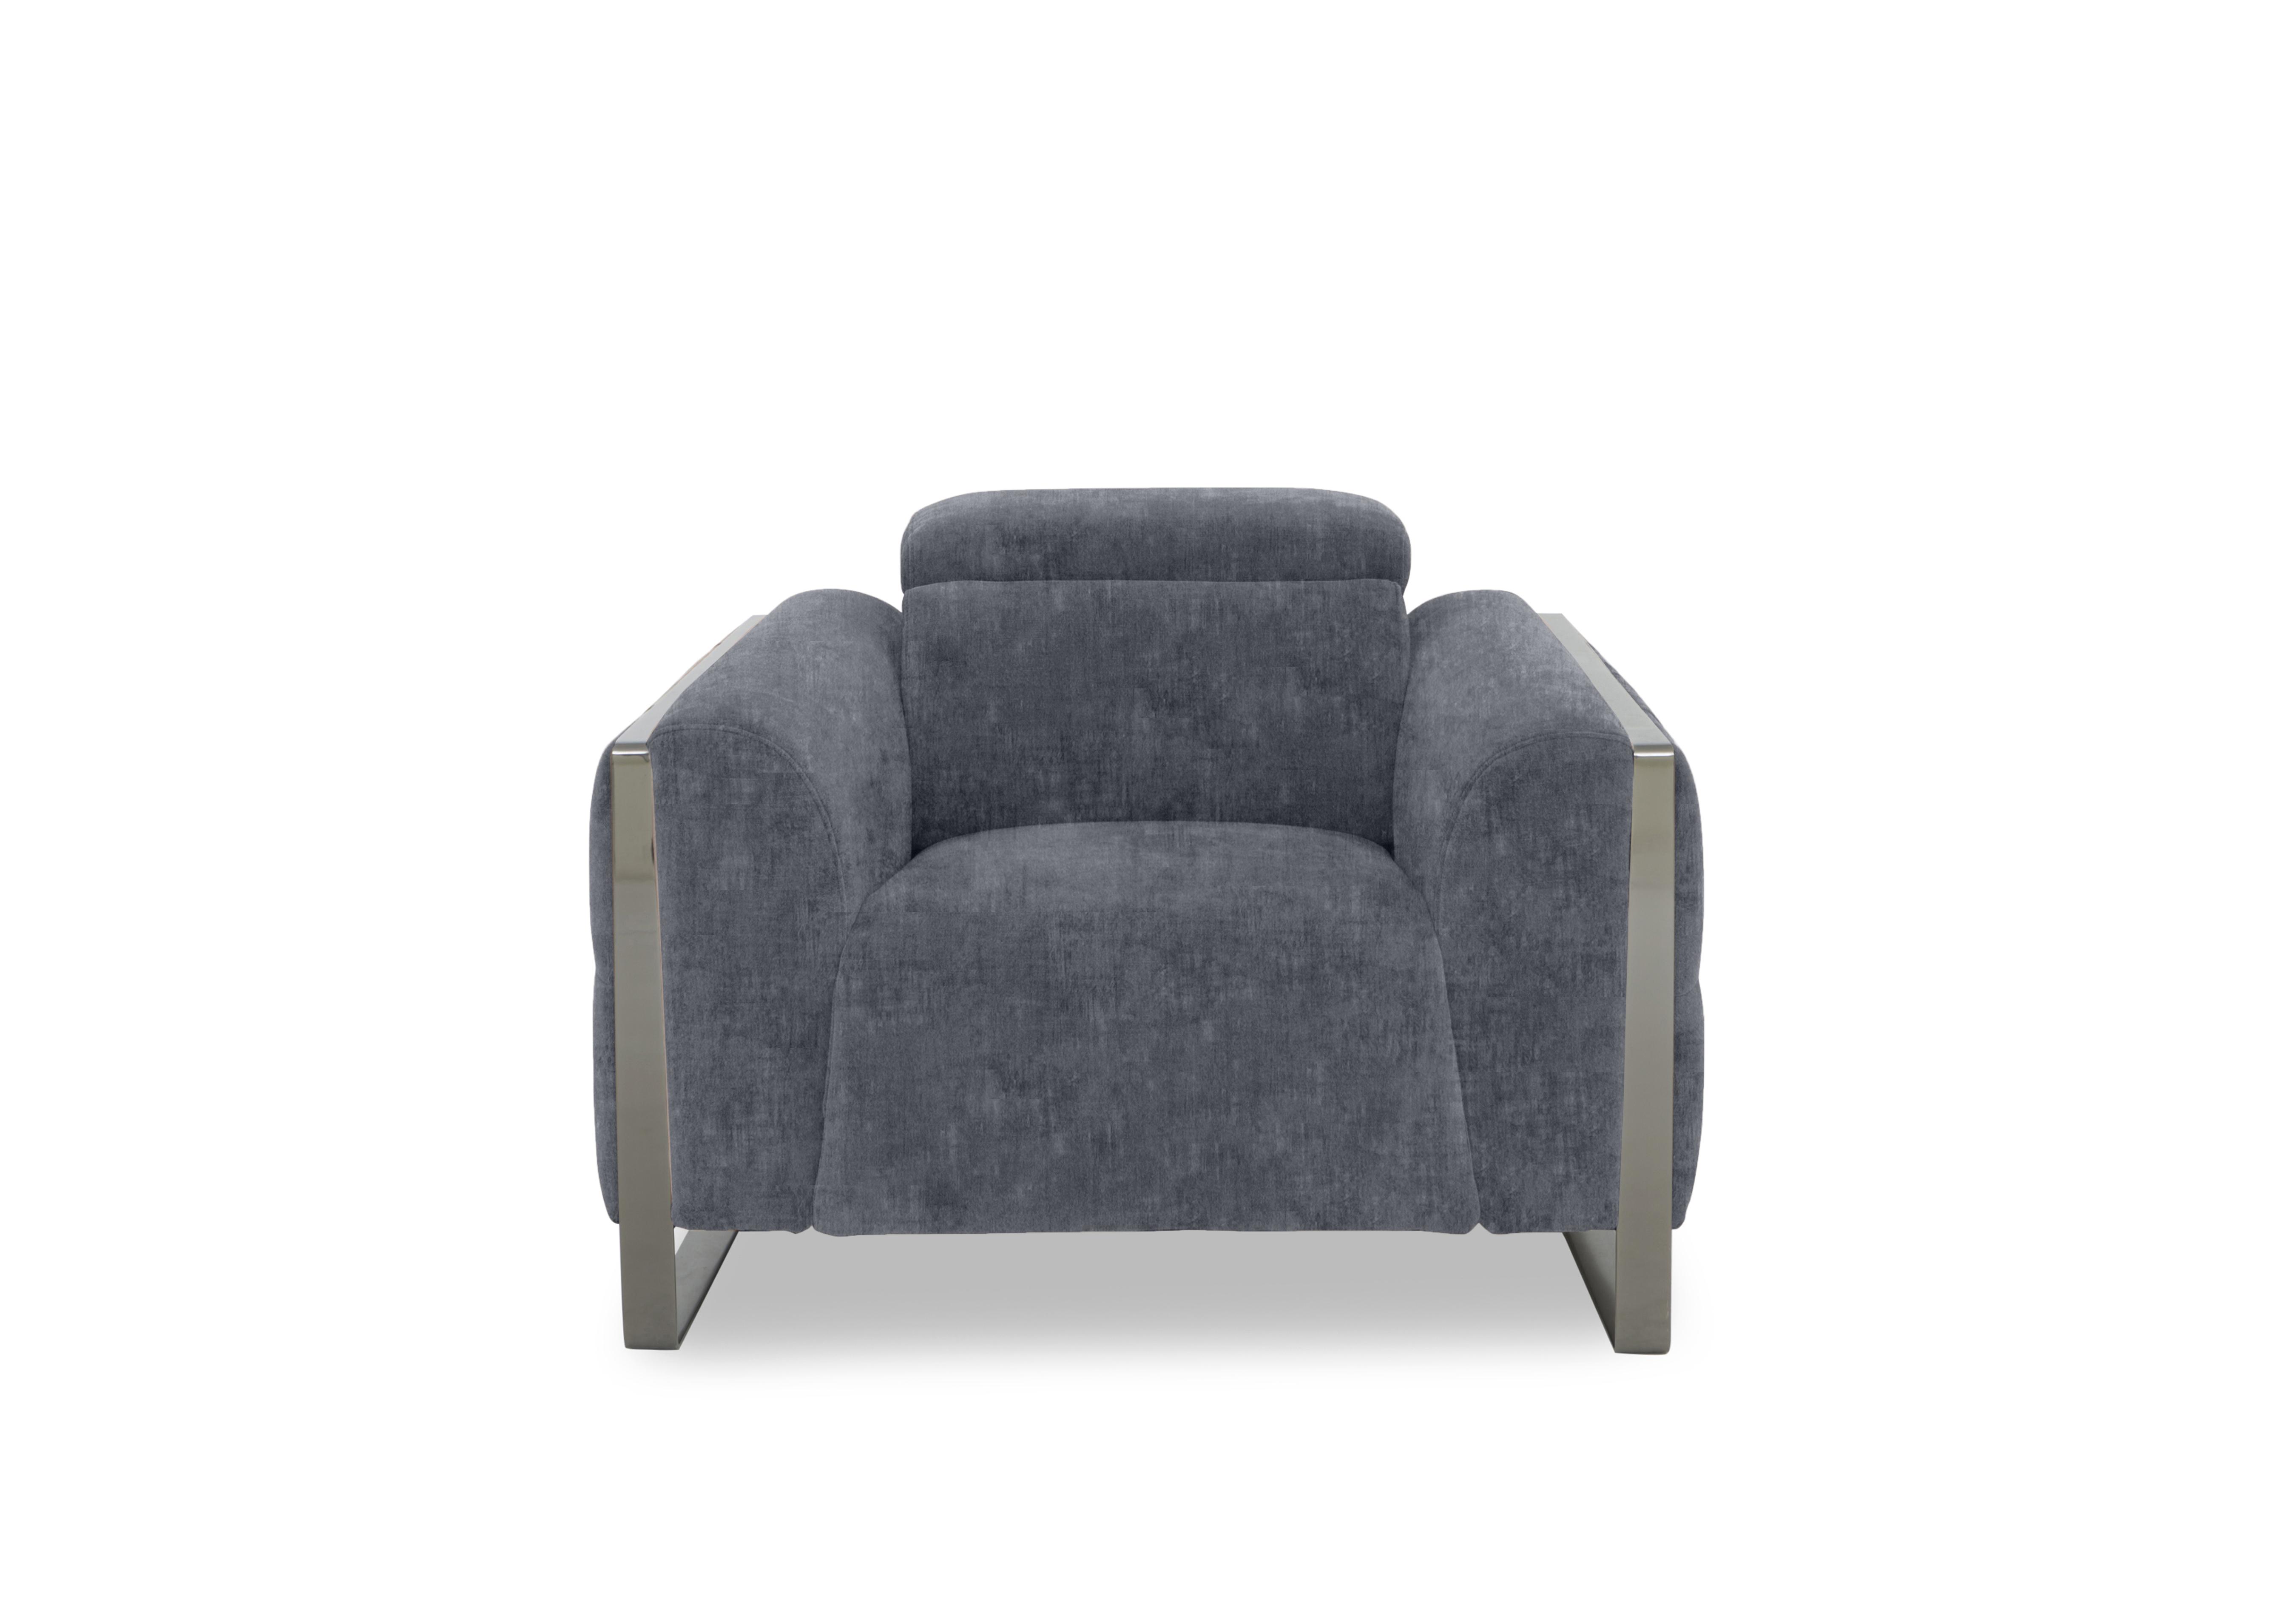 Gisella Fabric Chair in Heritage Granite 52001 on Furniture Village